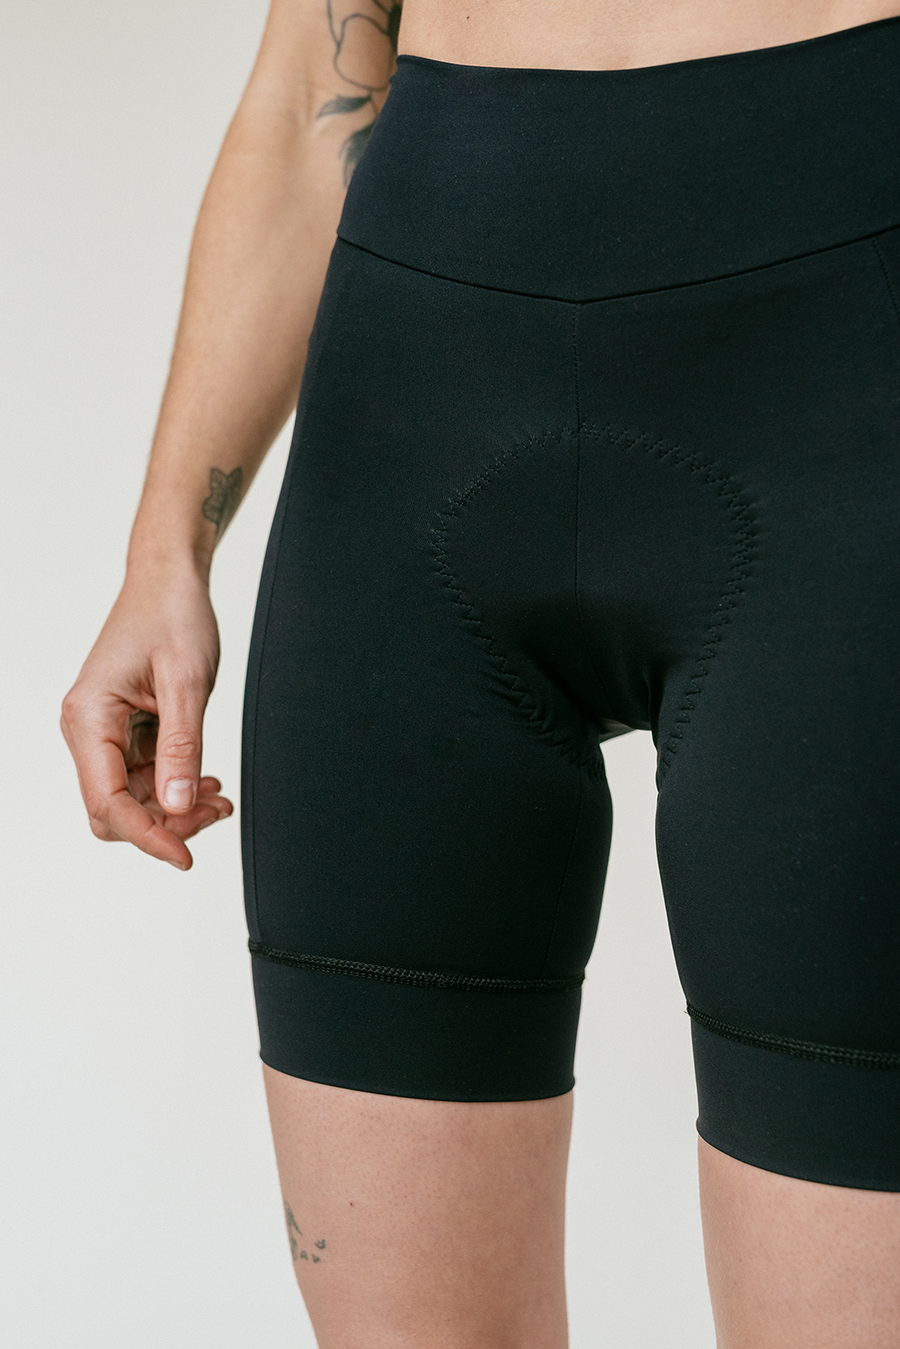 Cuissard de cyclisme femme court - Technologie menstruelle intégrée